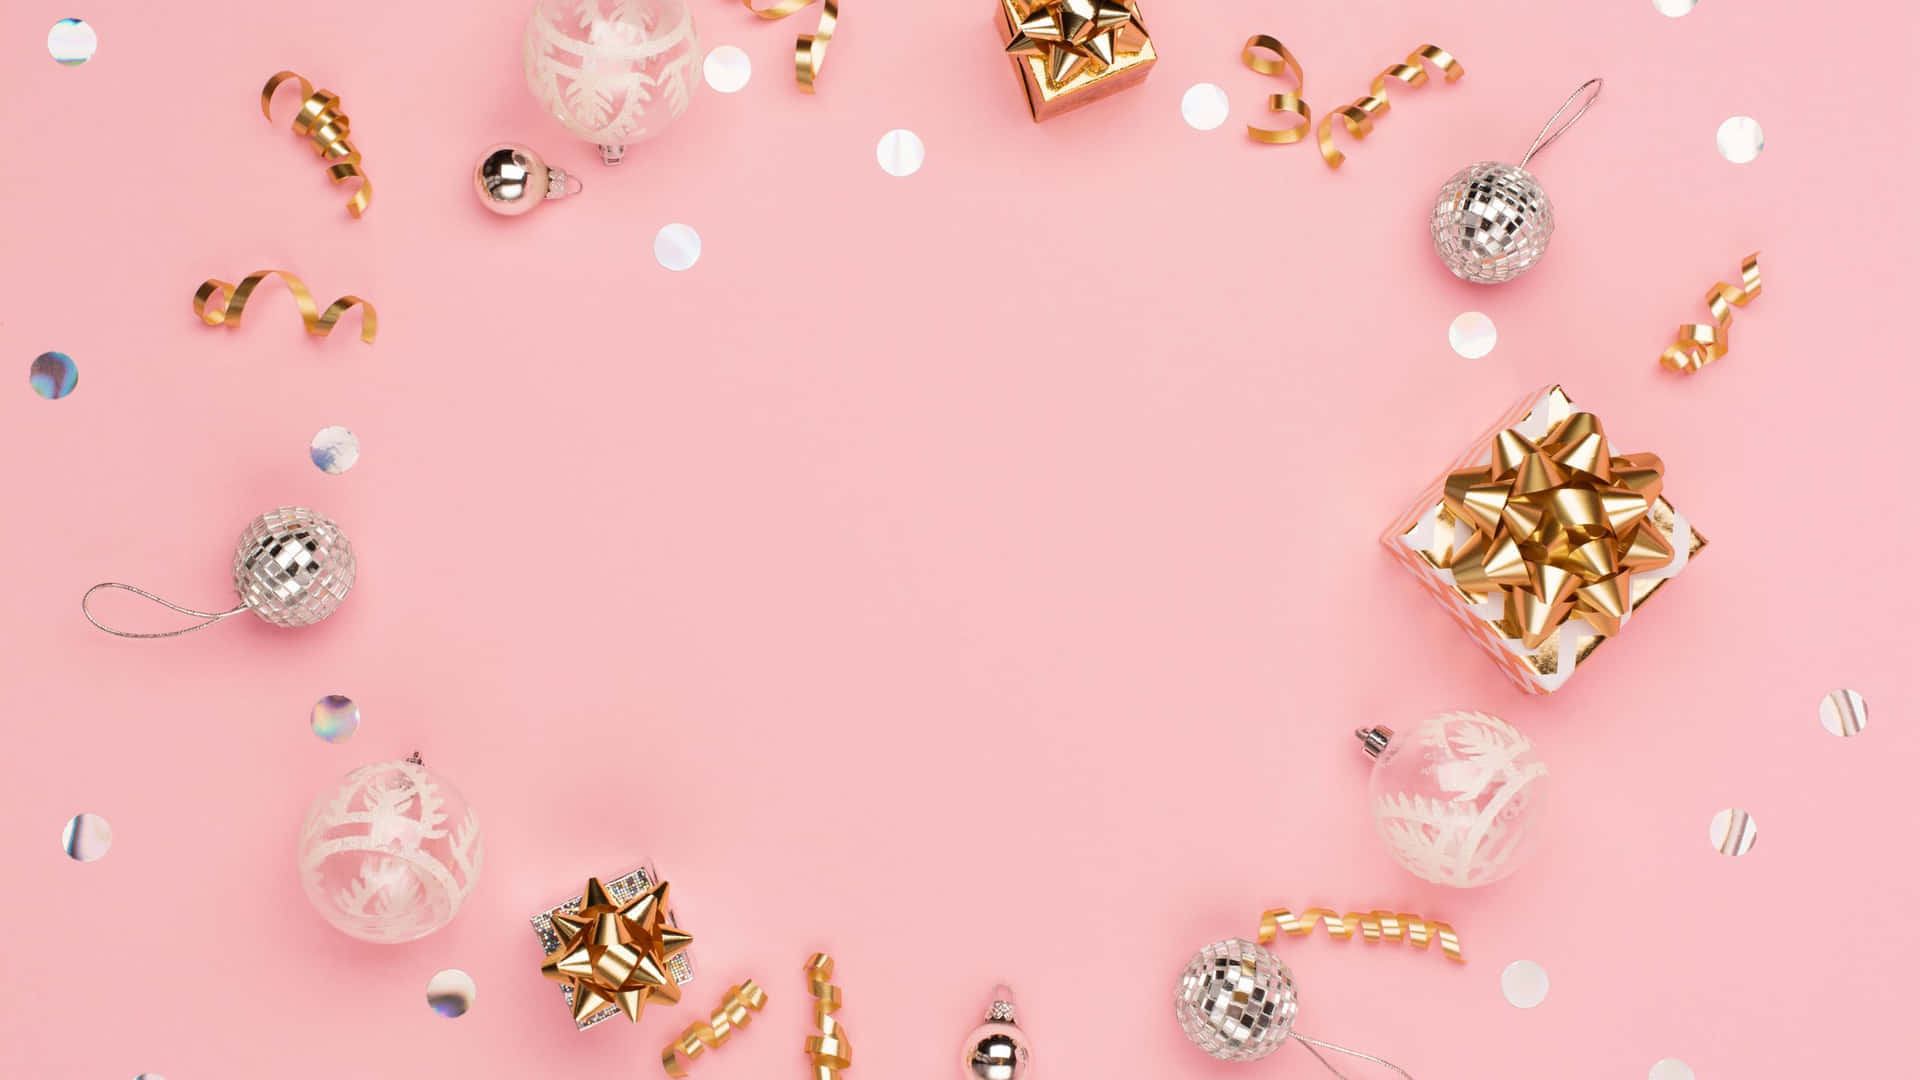 Festive Holiday Decor Pink Backdrop Wallpaper